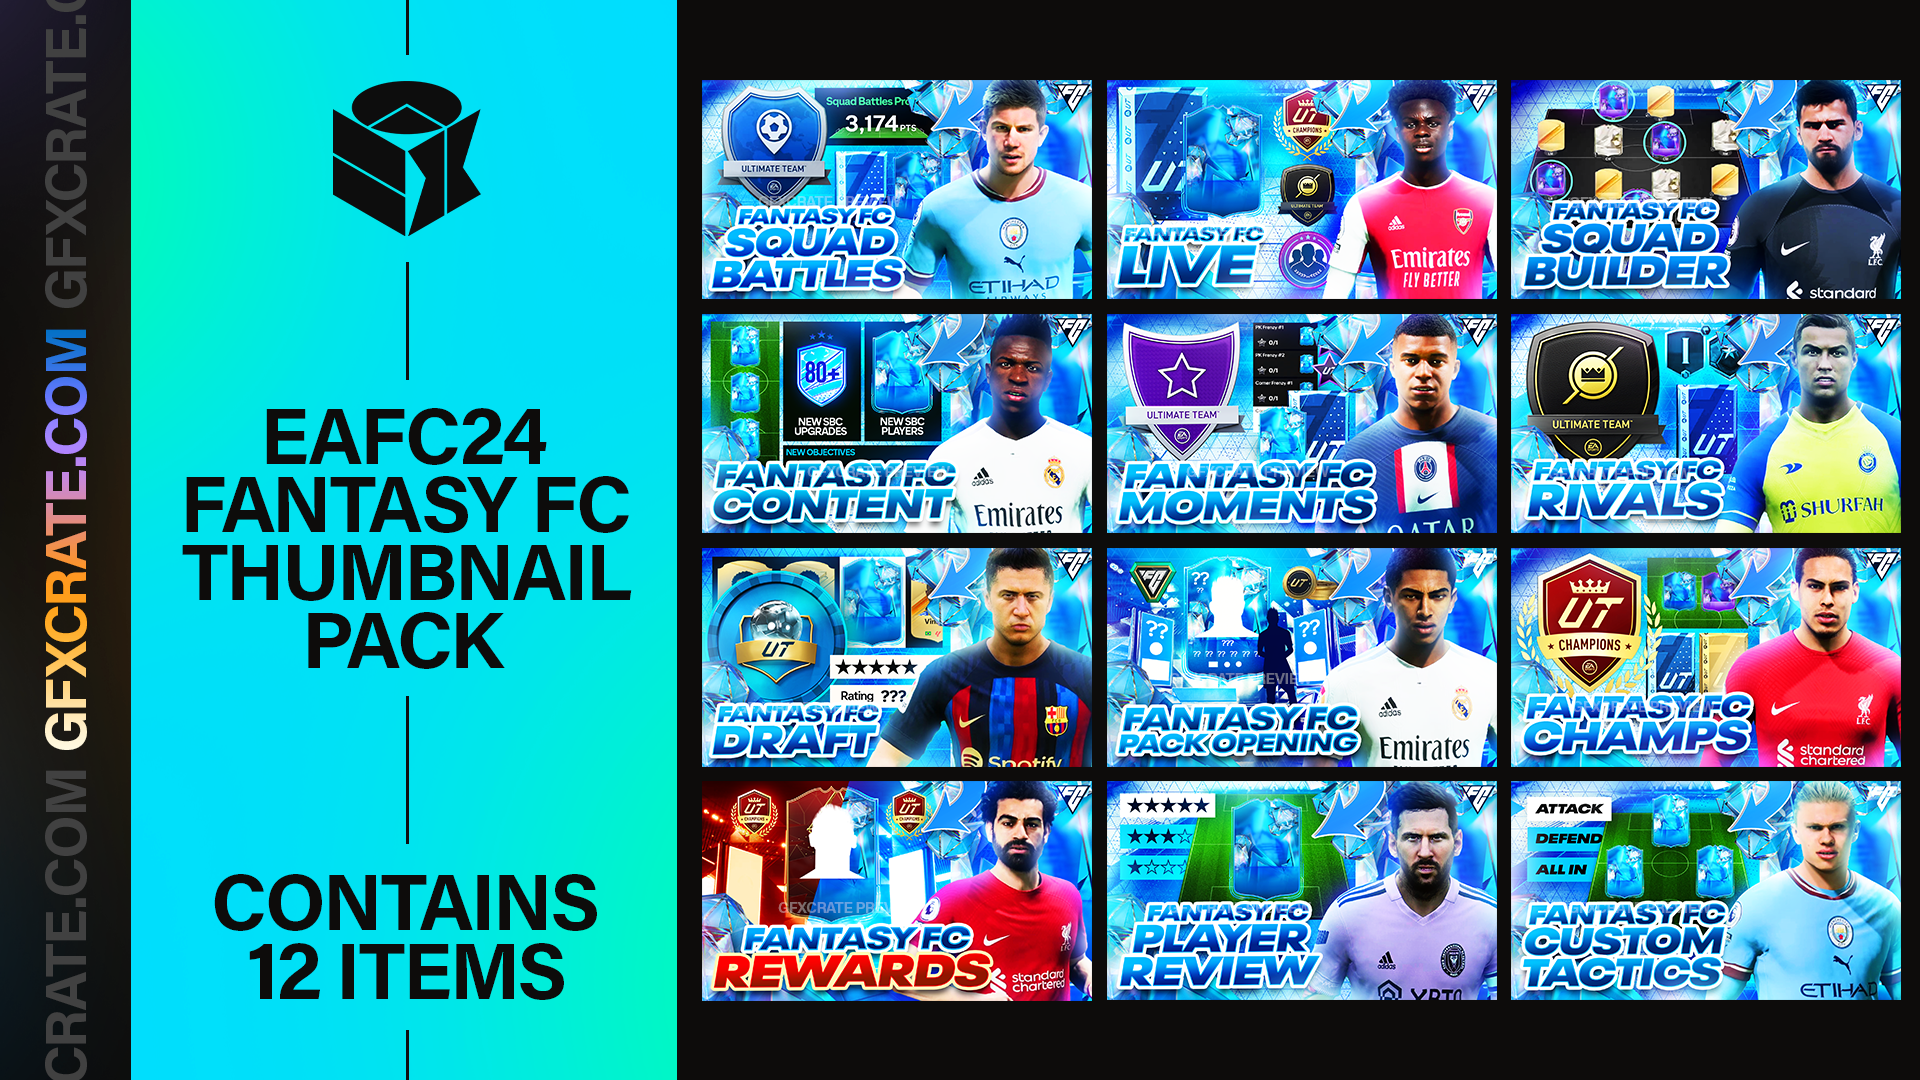 EA FC 24 Fantasy FC YouTube Thumbnail Pack